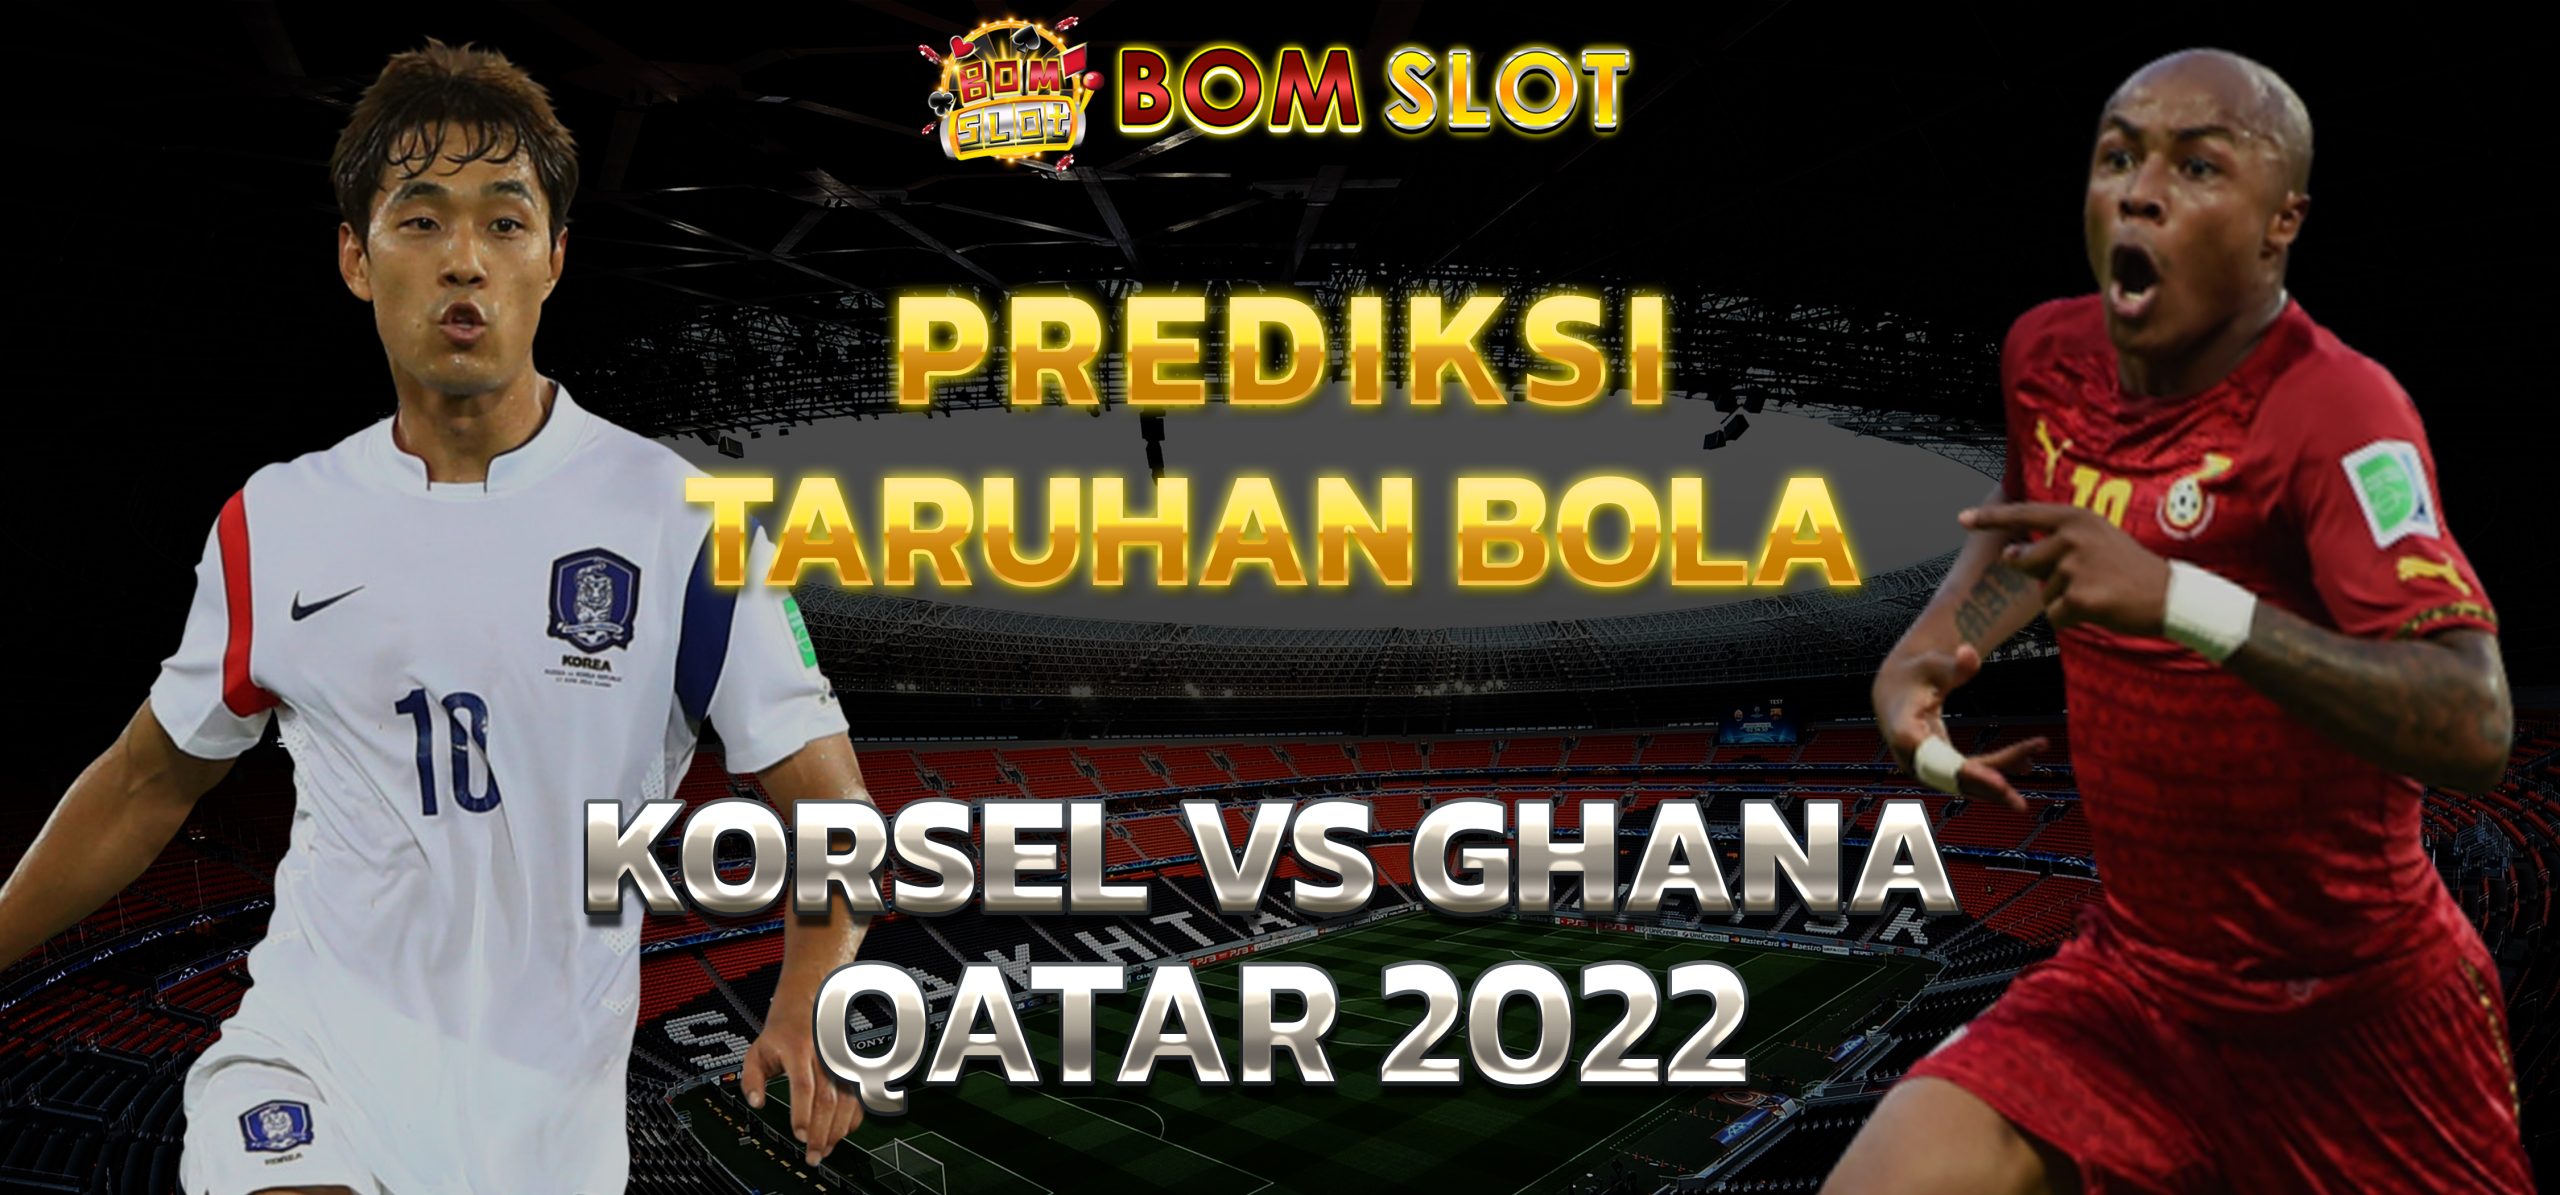 Prediksi Taruhan Bola Korea Selatan Vs Ghana Qatar 2022